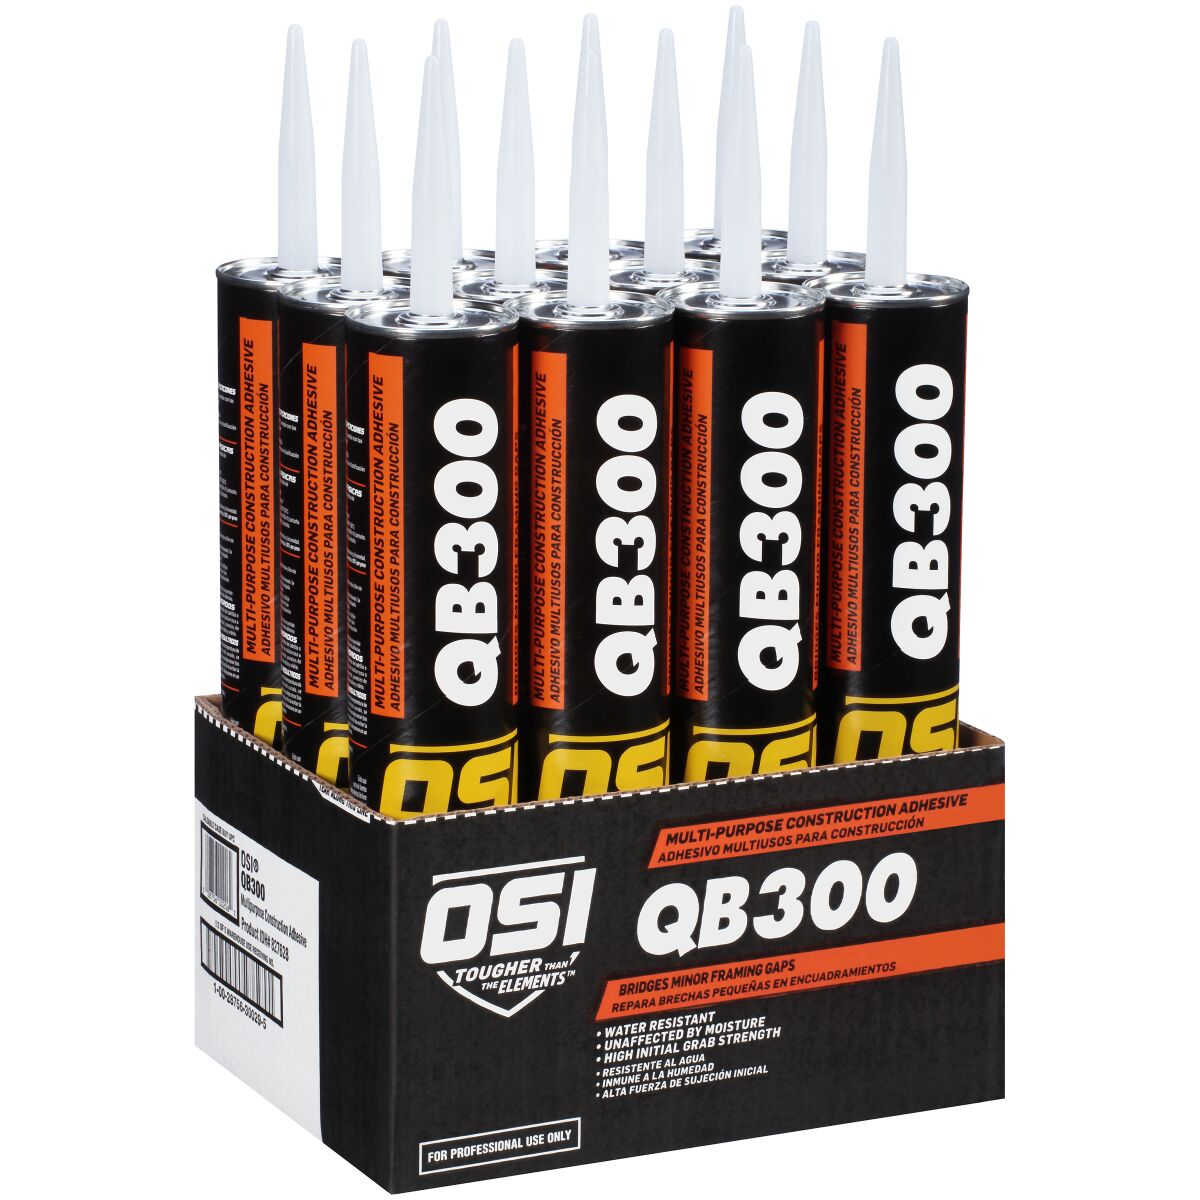 OSI QB300 Multi-Purpose Construction Adhesive